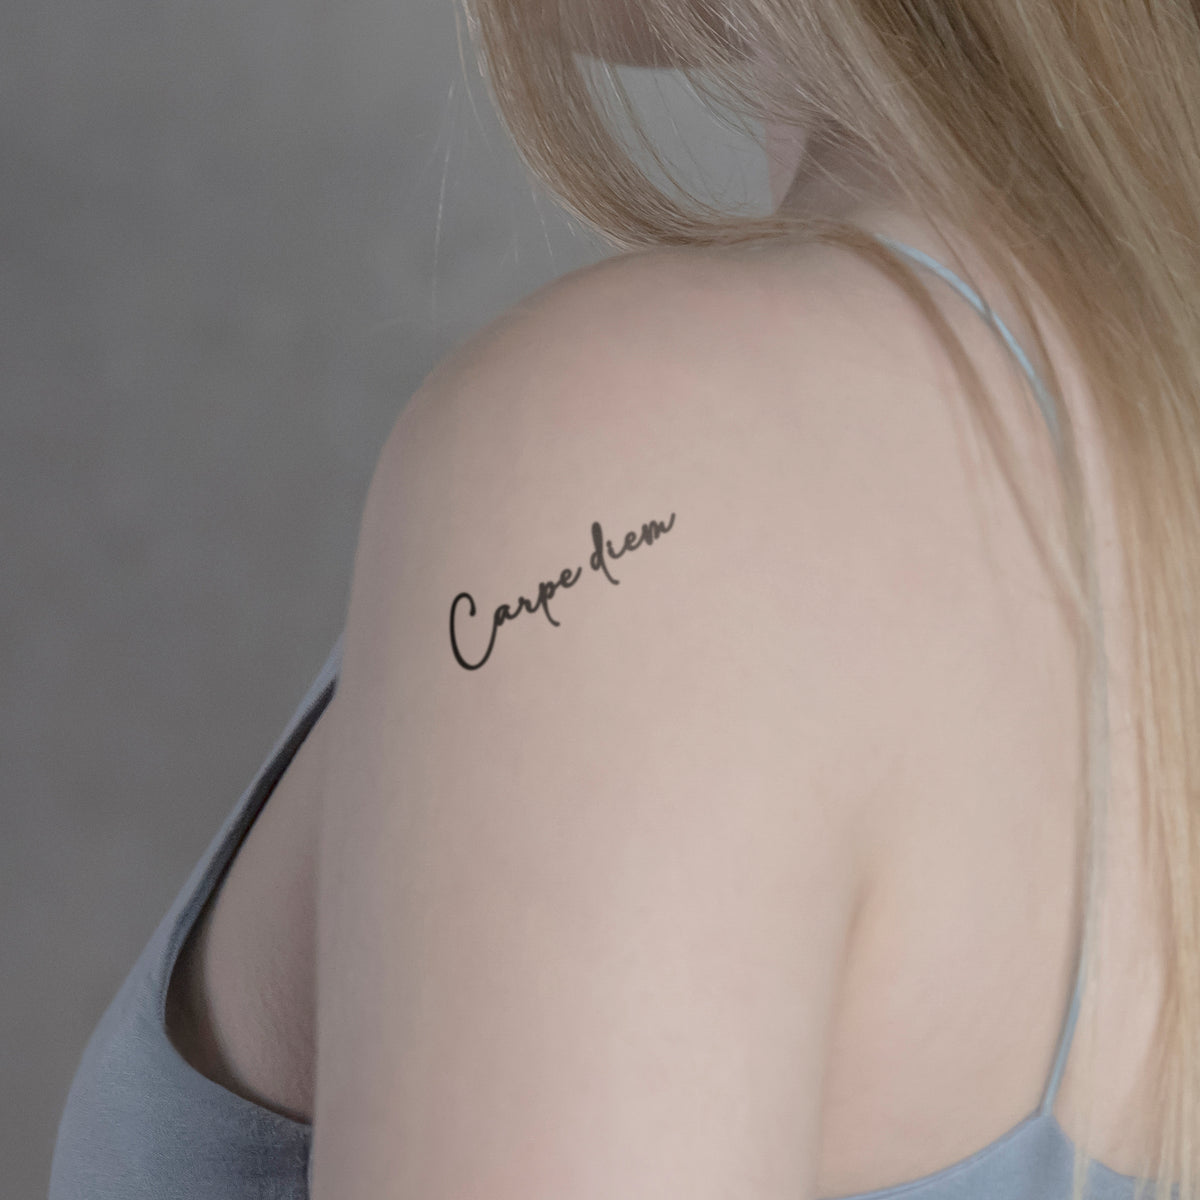 Carpe diem | Temporary tattoos - minink